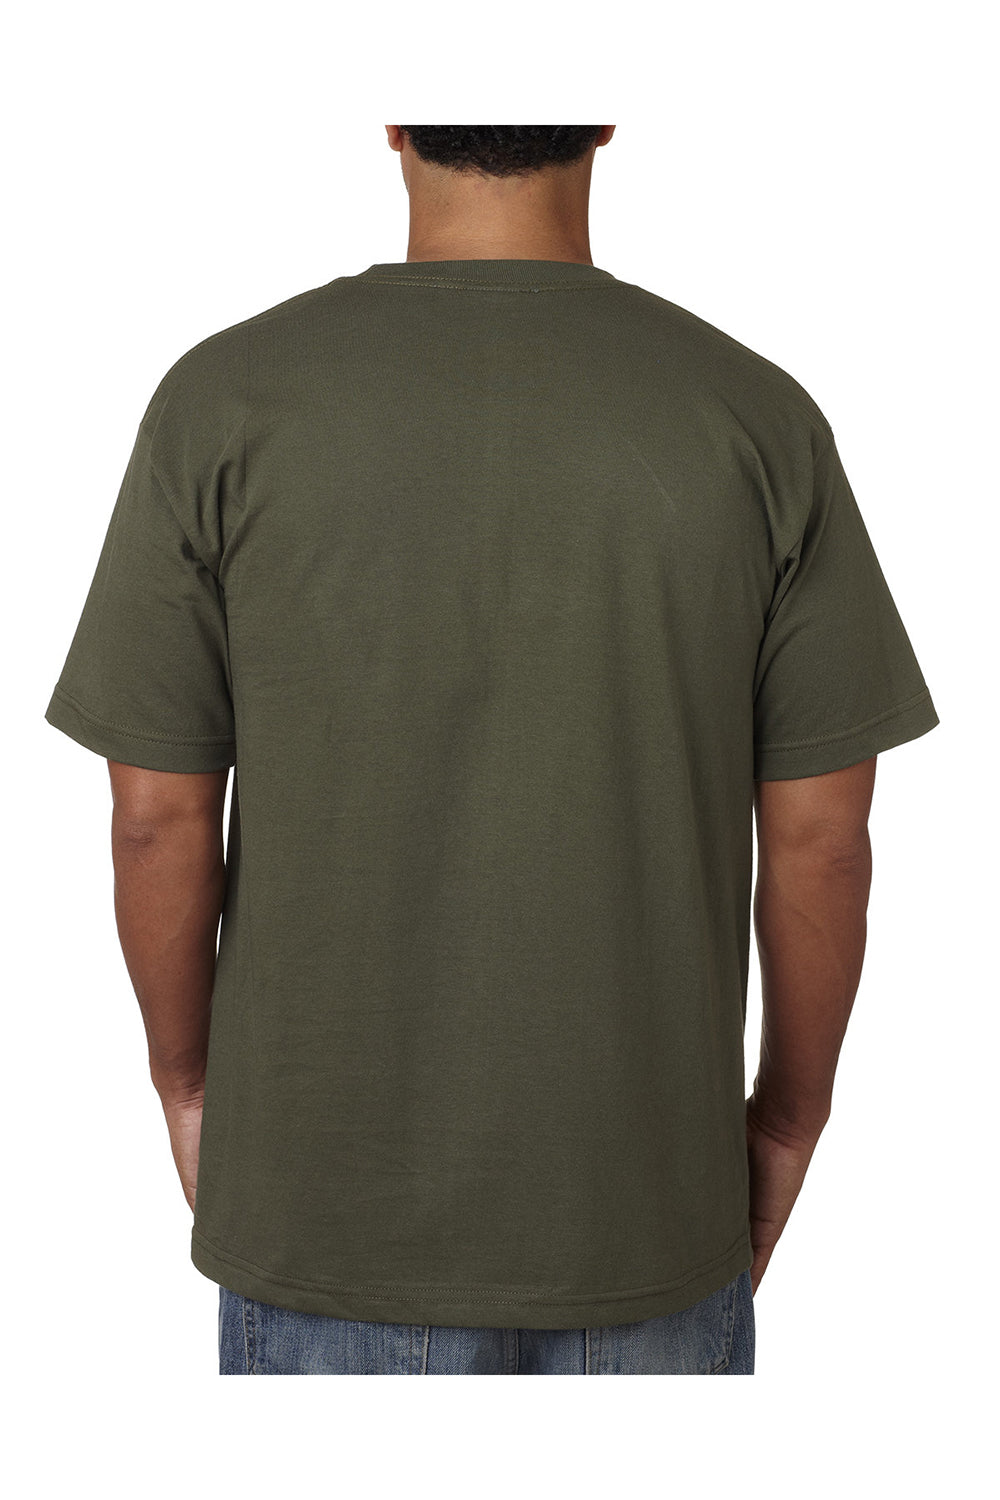 Bayside BA5040 Mens USA Made Short Sleeve Crewneck T-Shirt Olive Green Model Back